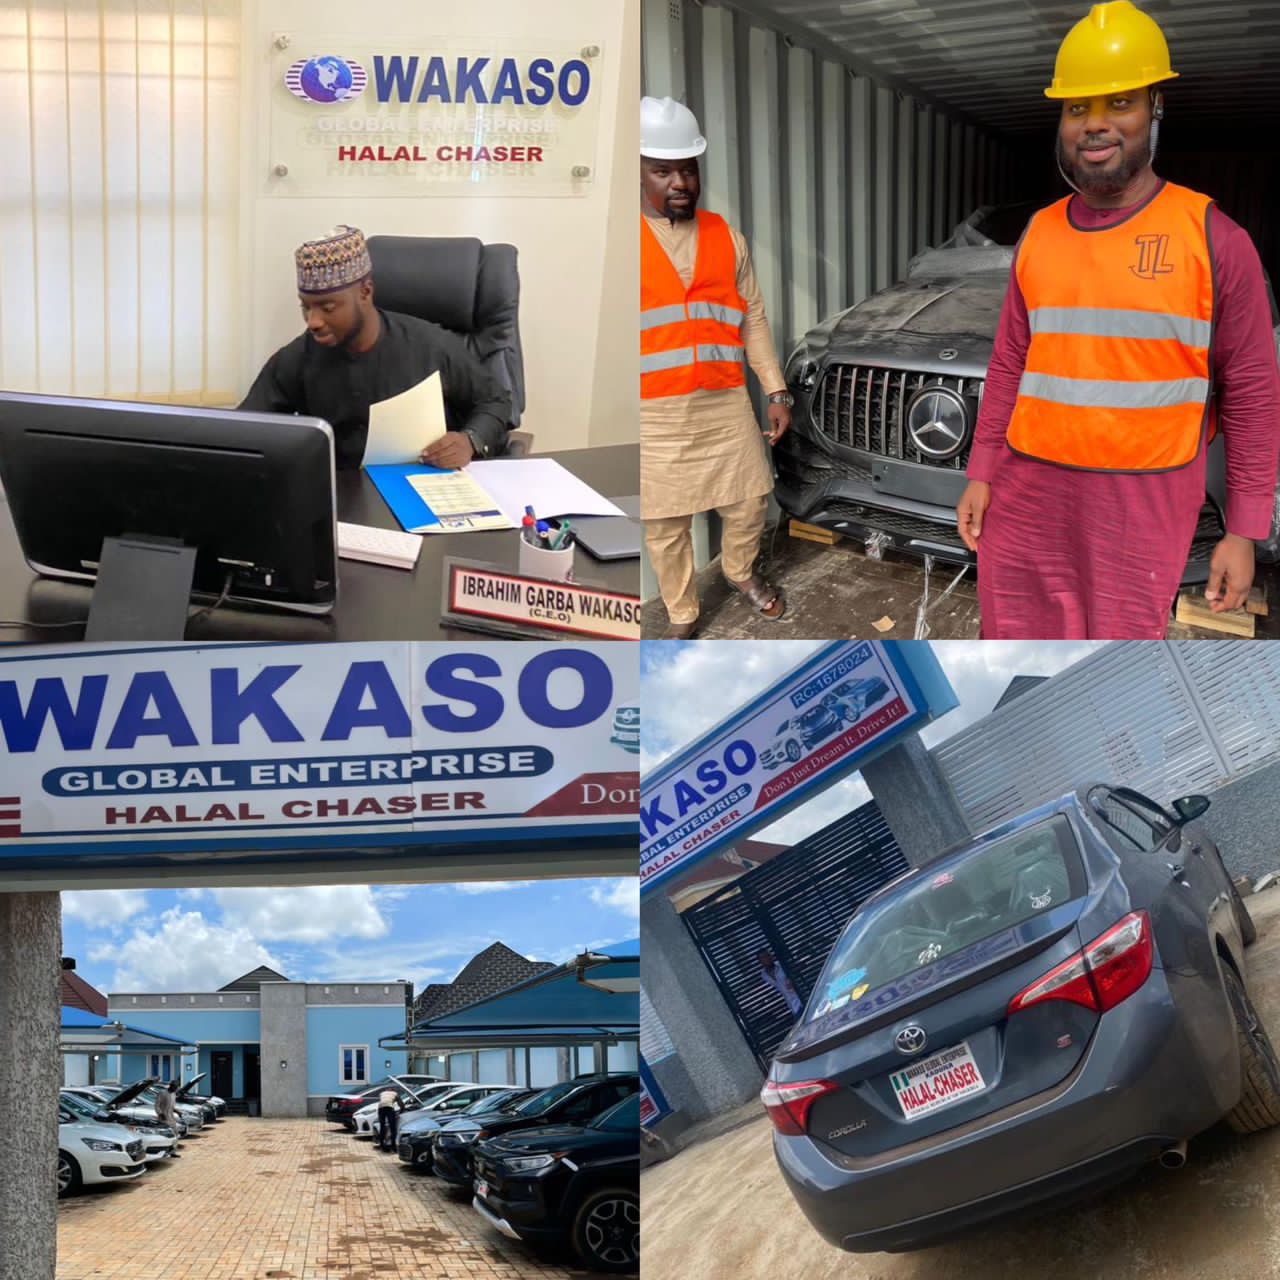 Halal Chaser Autos LTD - Wakaso Global enterprise: The Leading Affordable Car Dealership in Nigeria